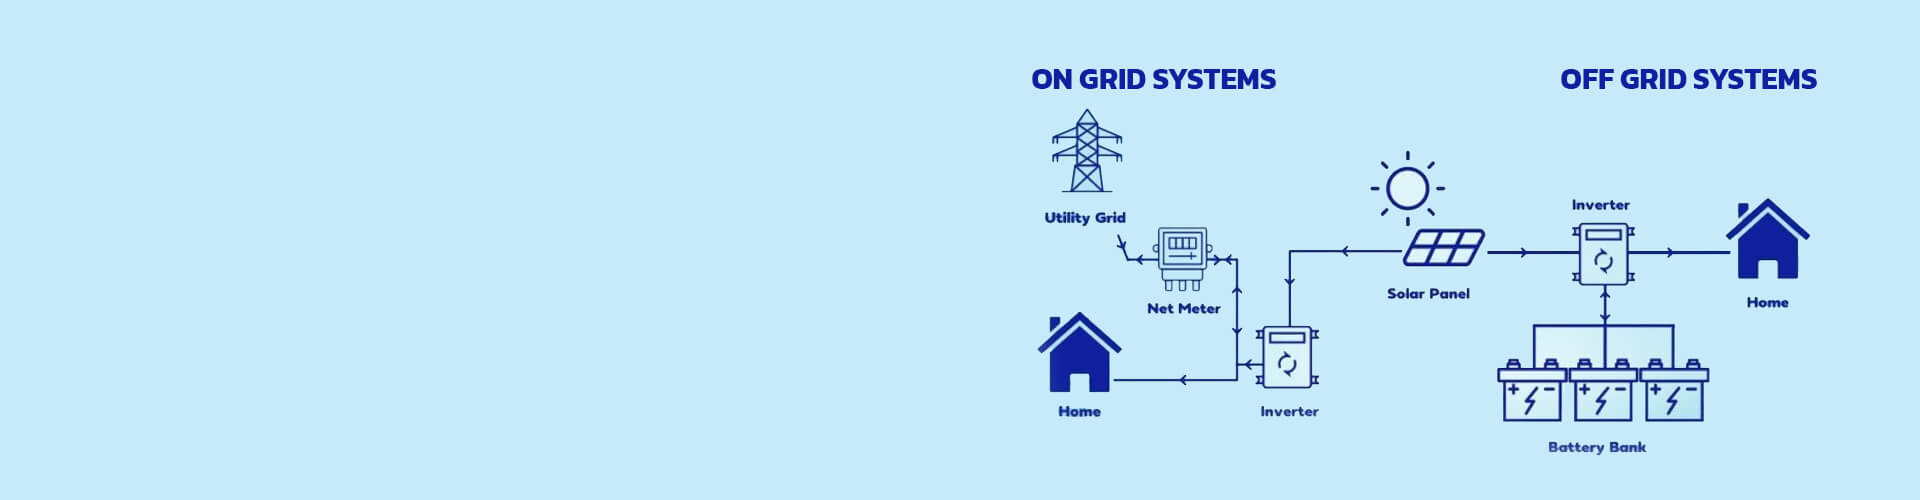 Off Grid vs. On Grid Systems – Considering Growatt’s new launch